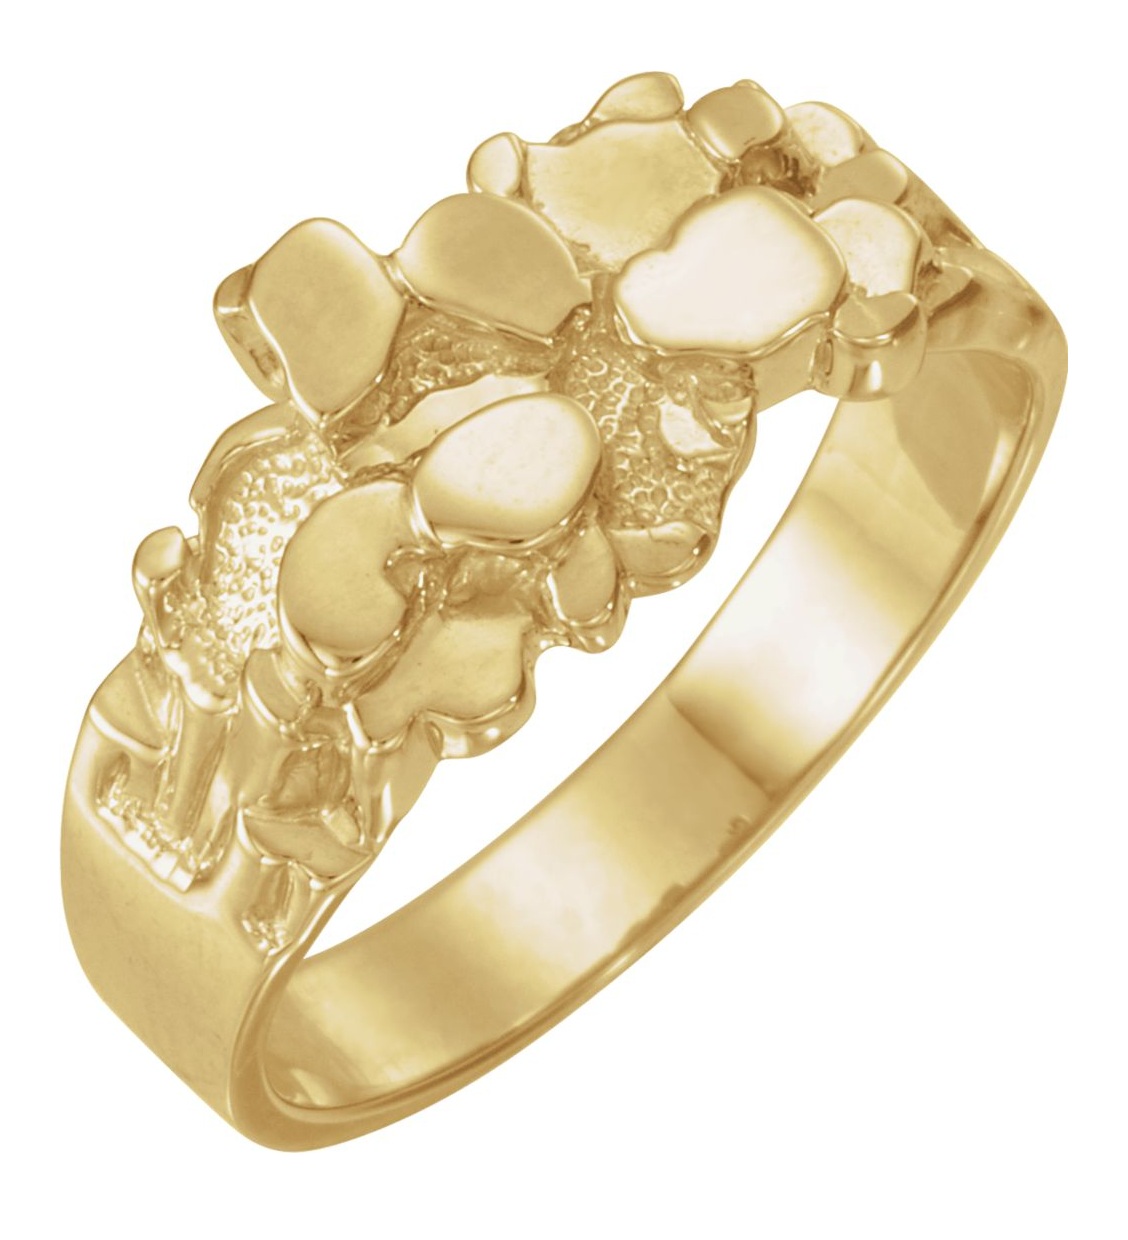 14k Yellow Gold Men's Nugget Ring, Size 10
